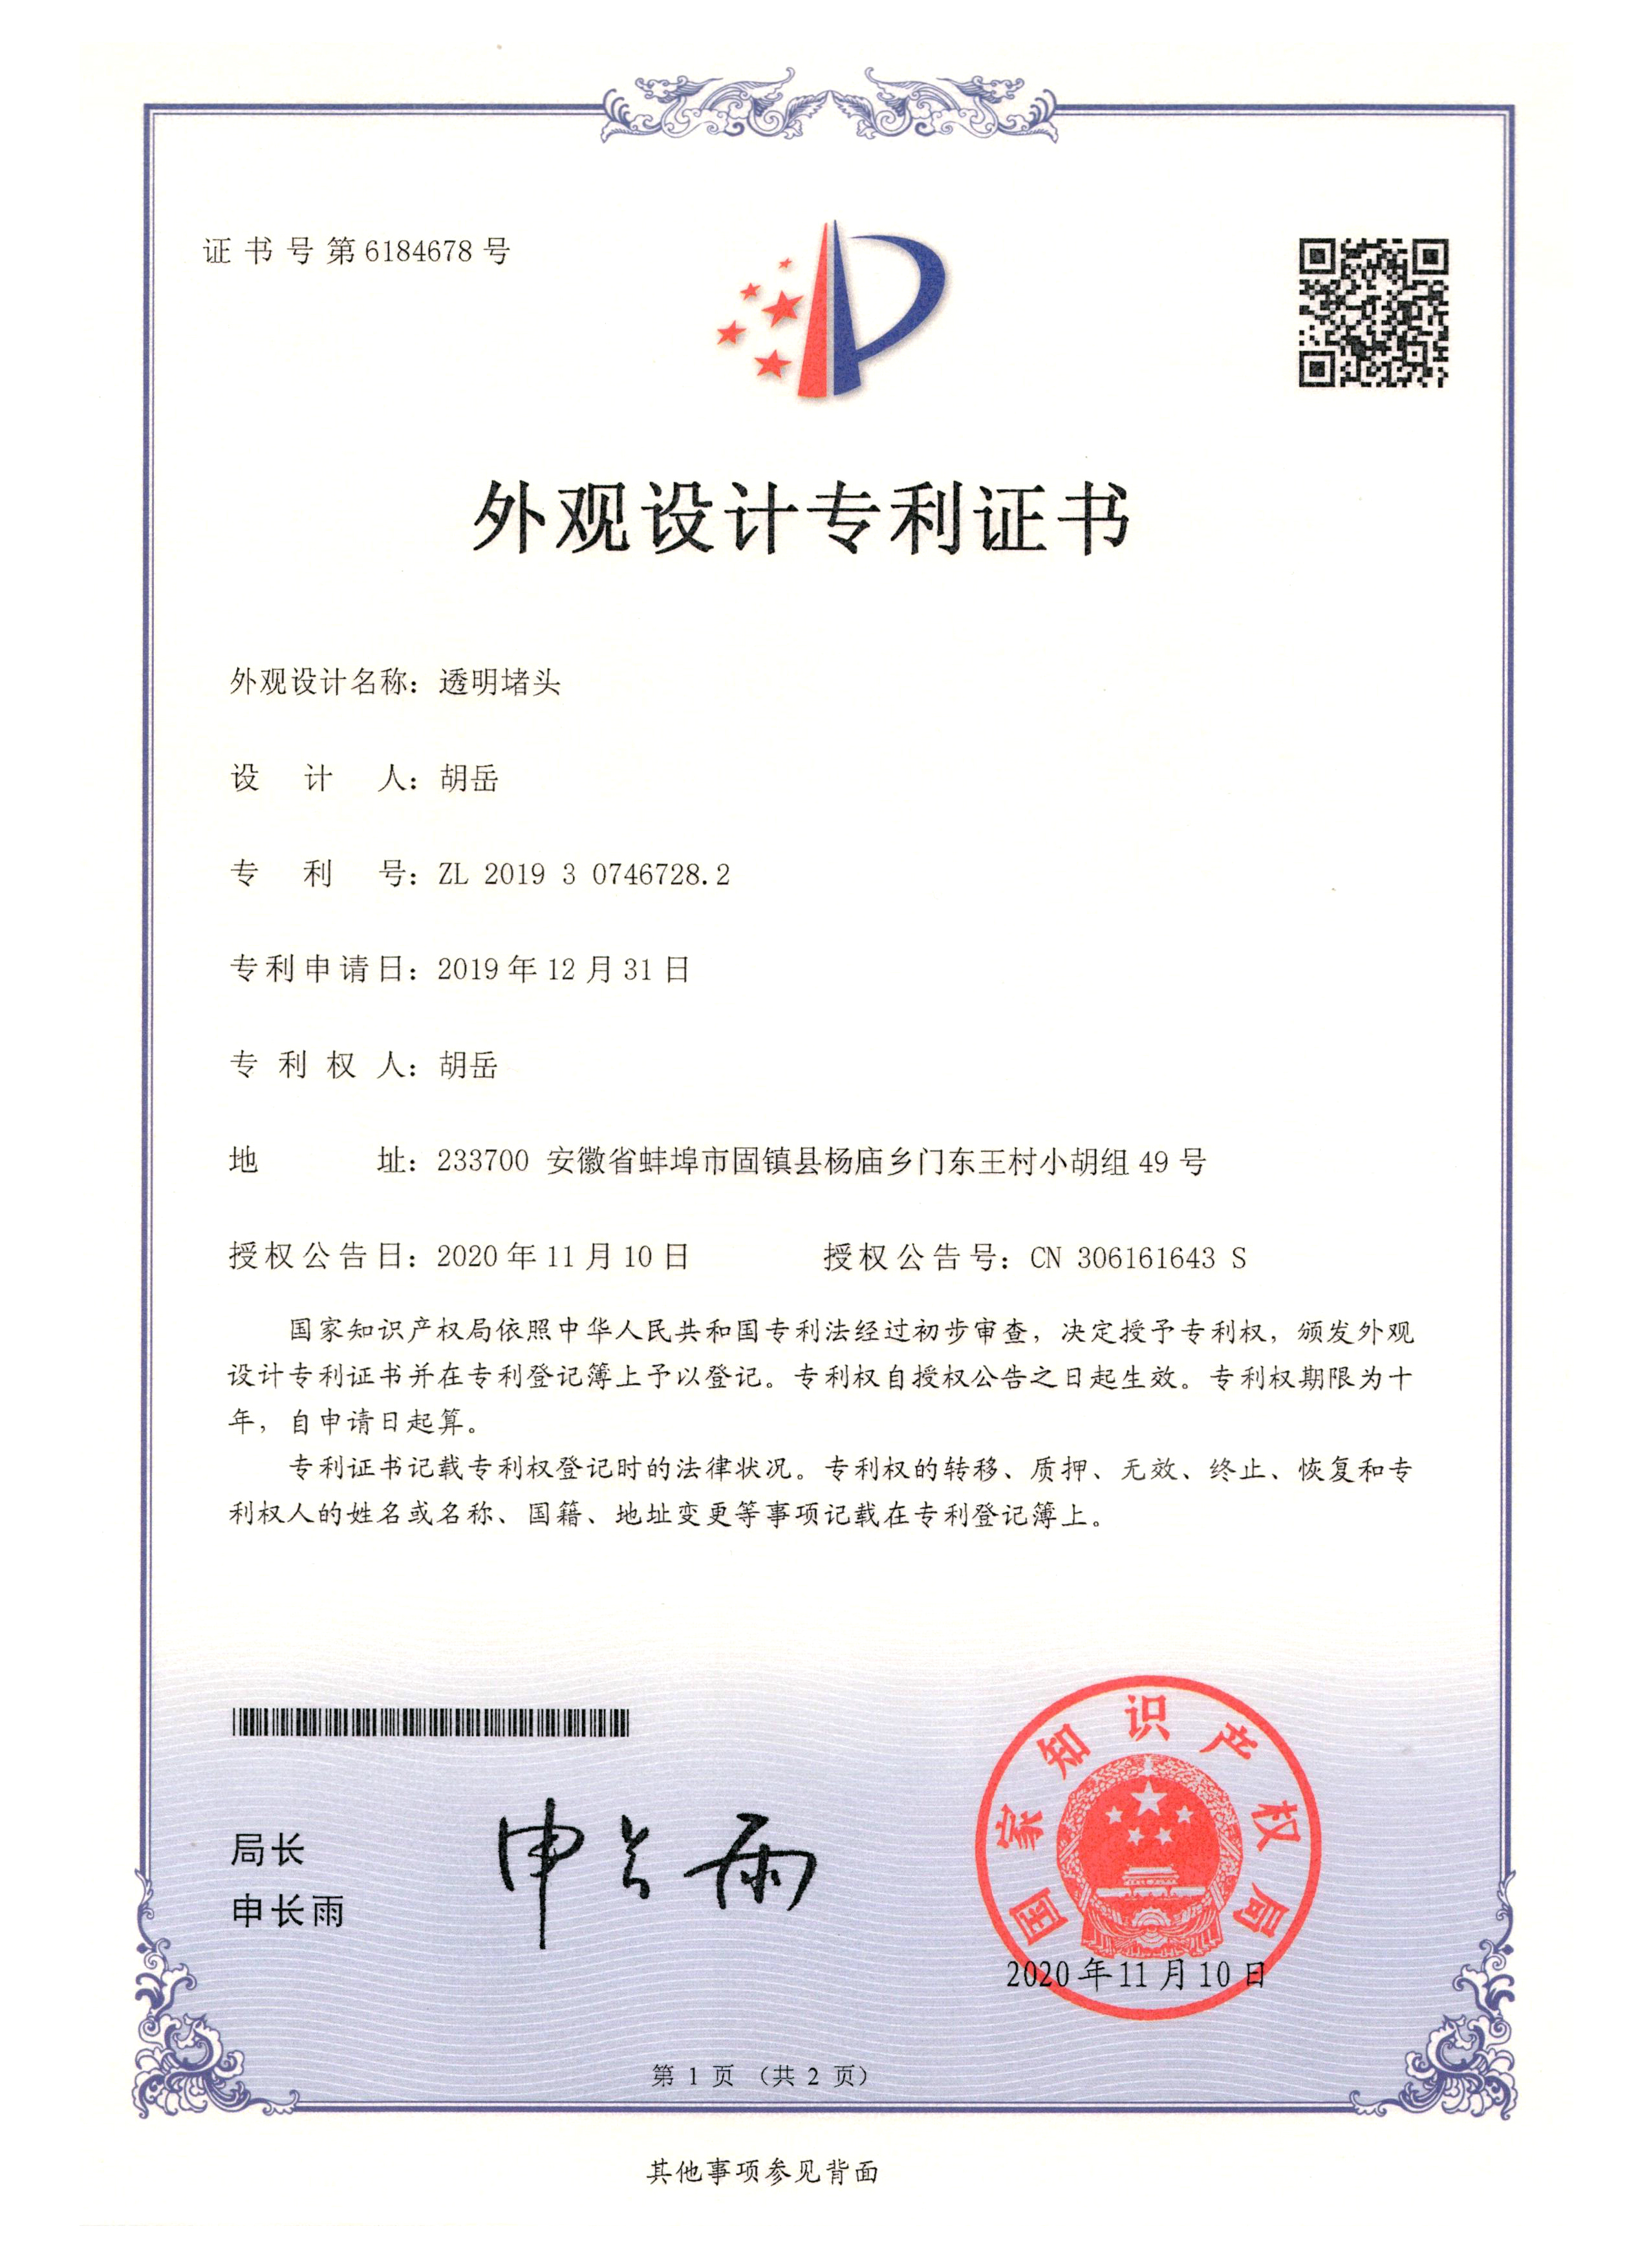 CN306161643S Microduct Endcap hanauna mua Patent RightCN306161643S Microduct Endcap hanauna mua Patent Right